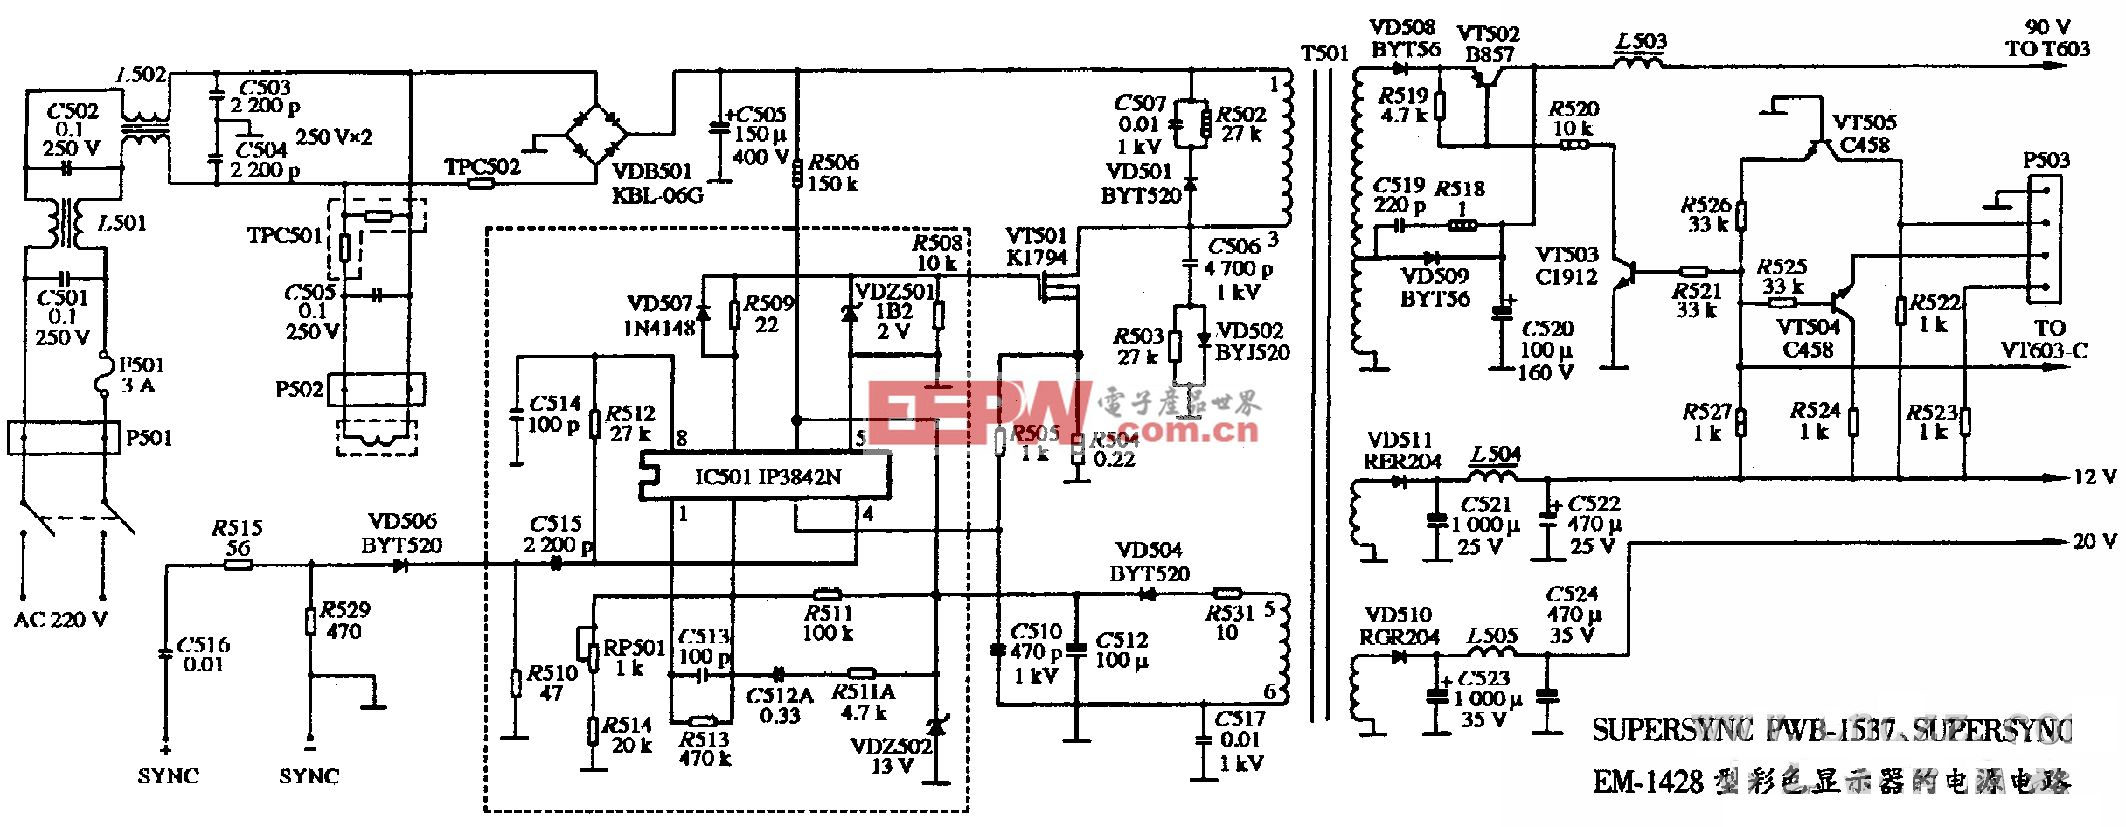 SUPERSYNC PWB-1537、SUPERSYNC EM-1428二种机型彩色显示器的电源电路图